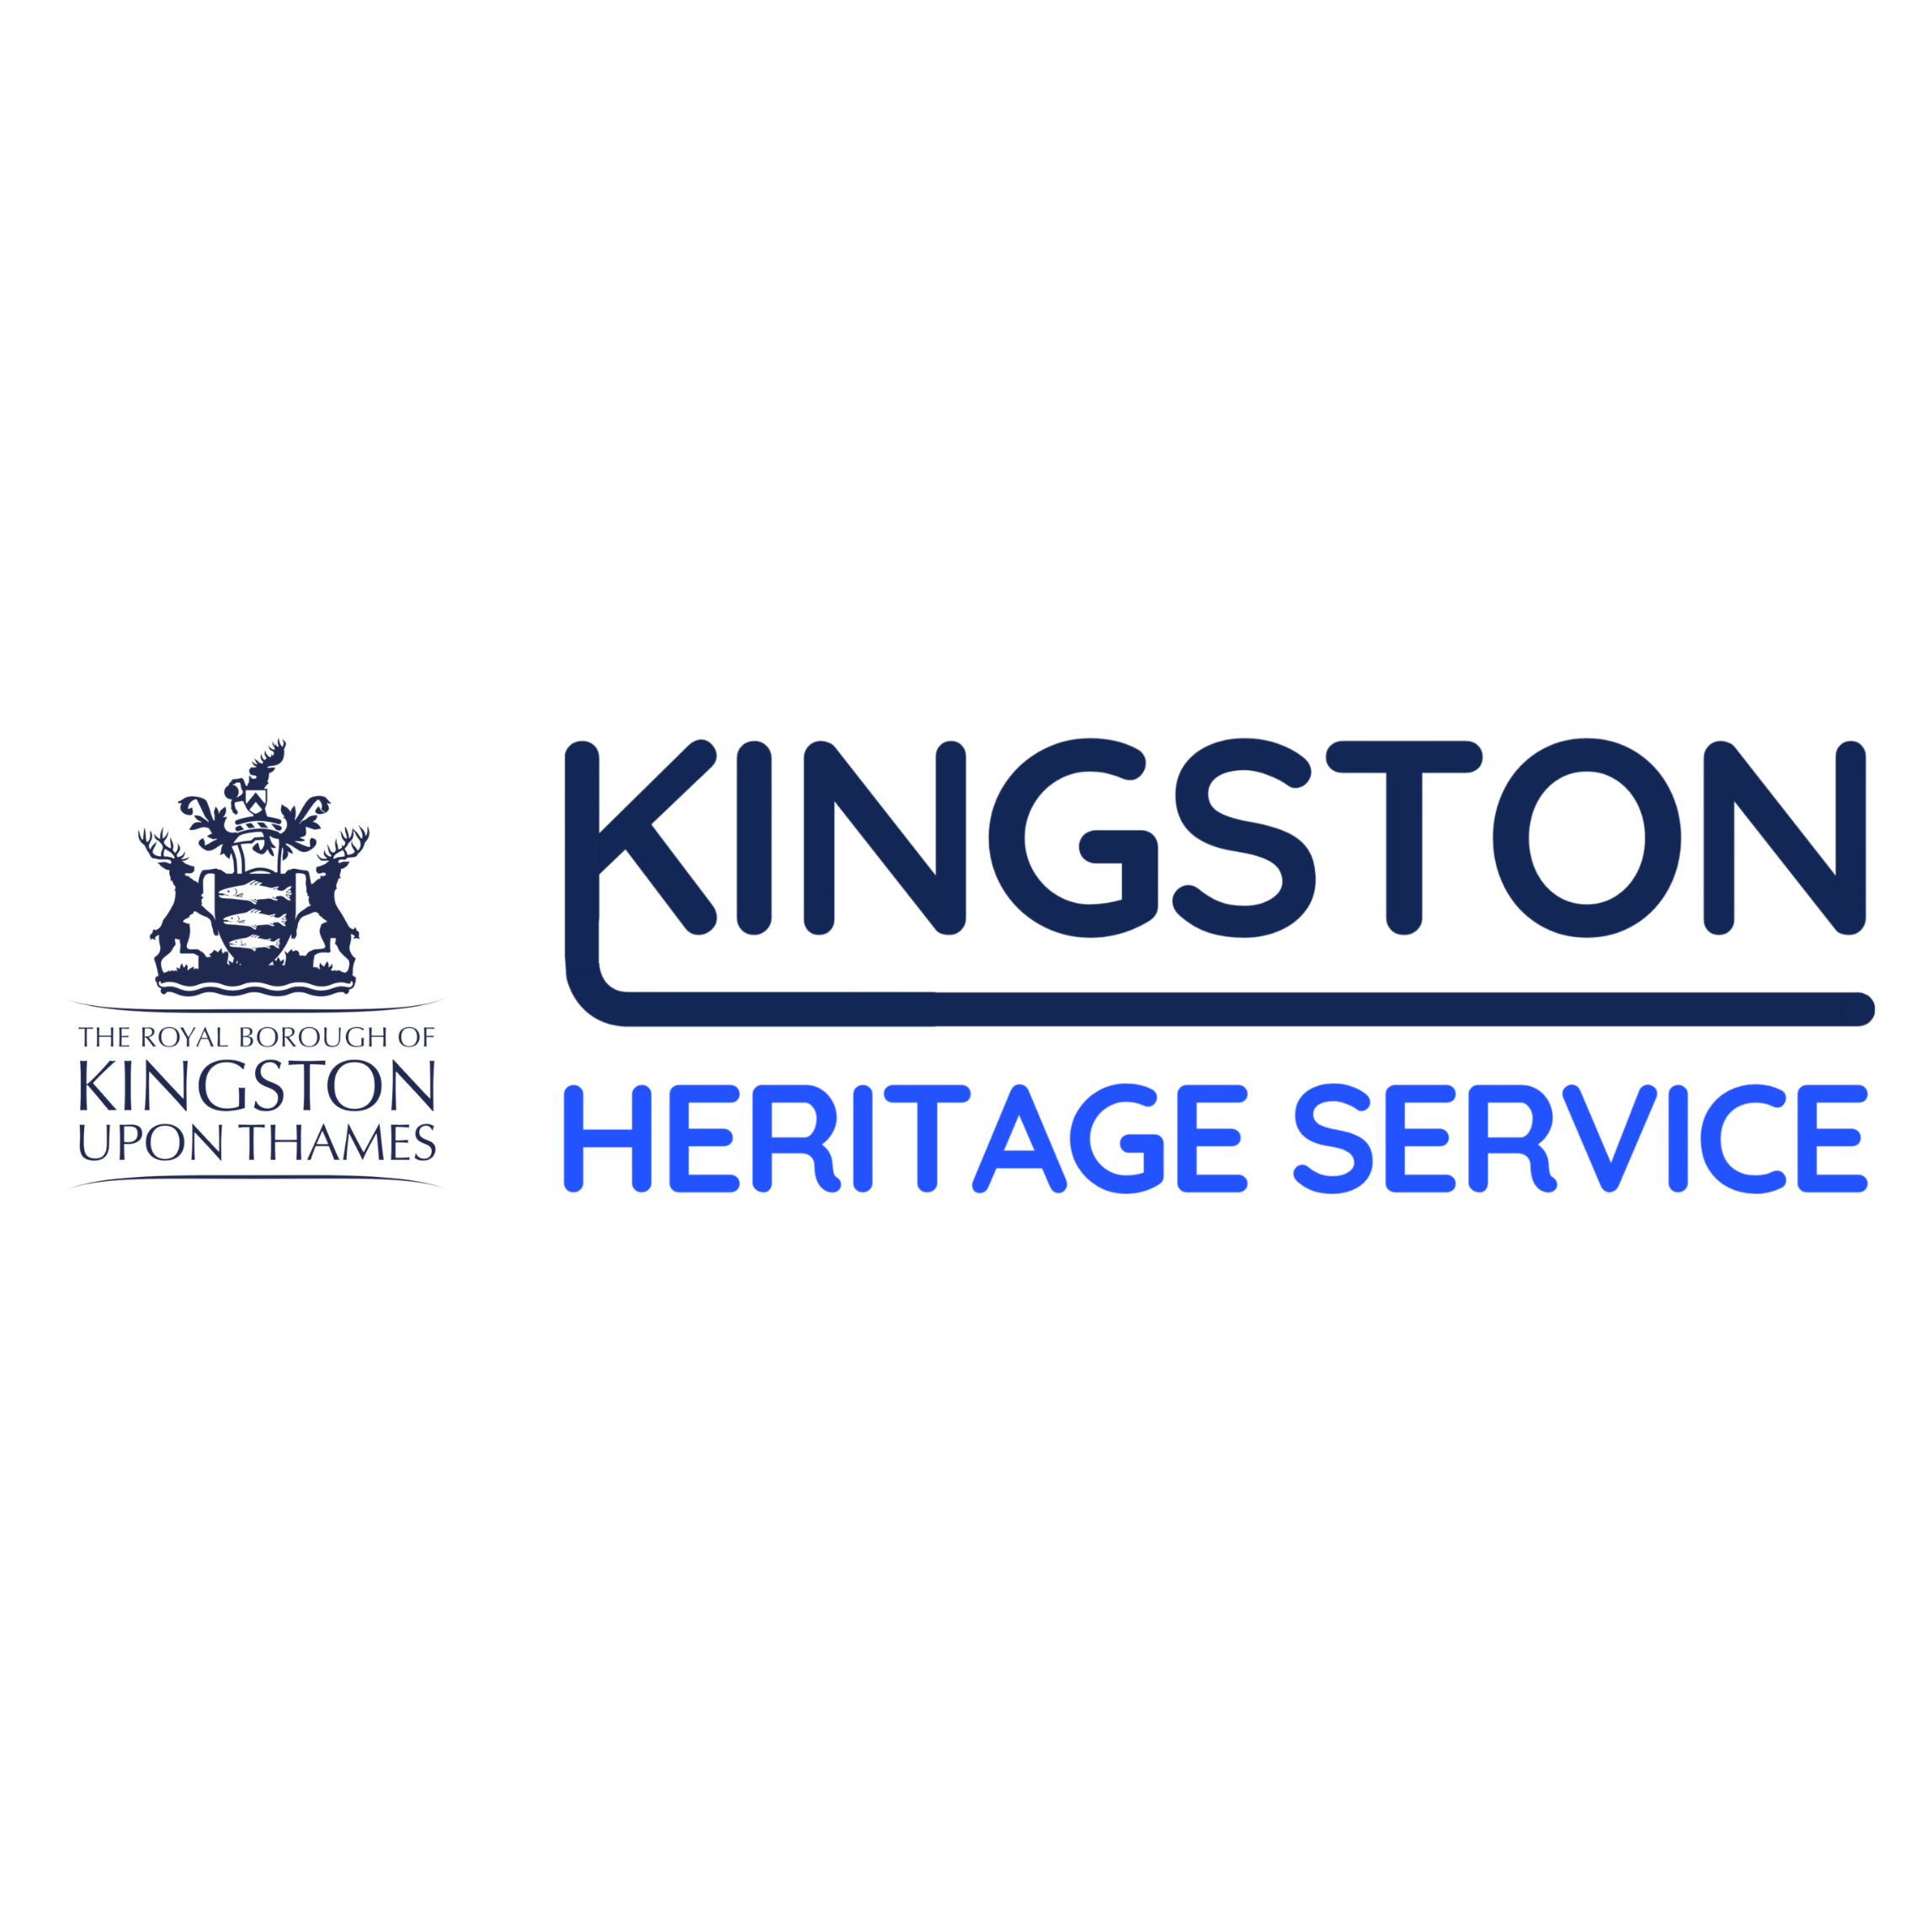 Kingston Council and Kingston Heritage Service Logo Tile